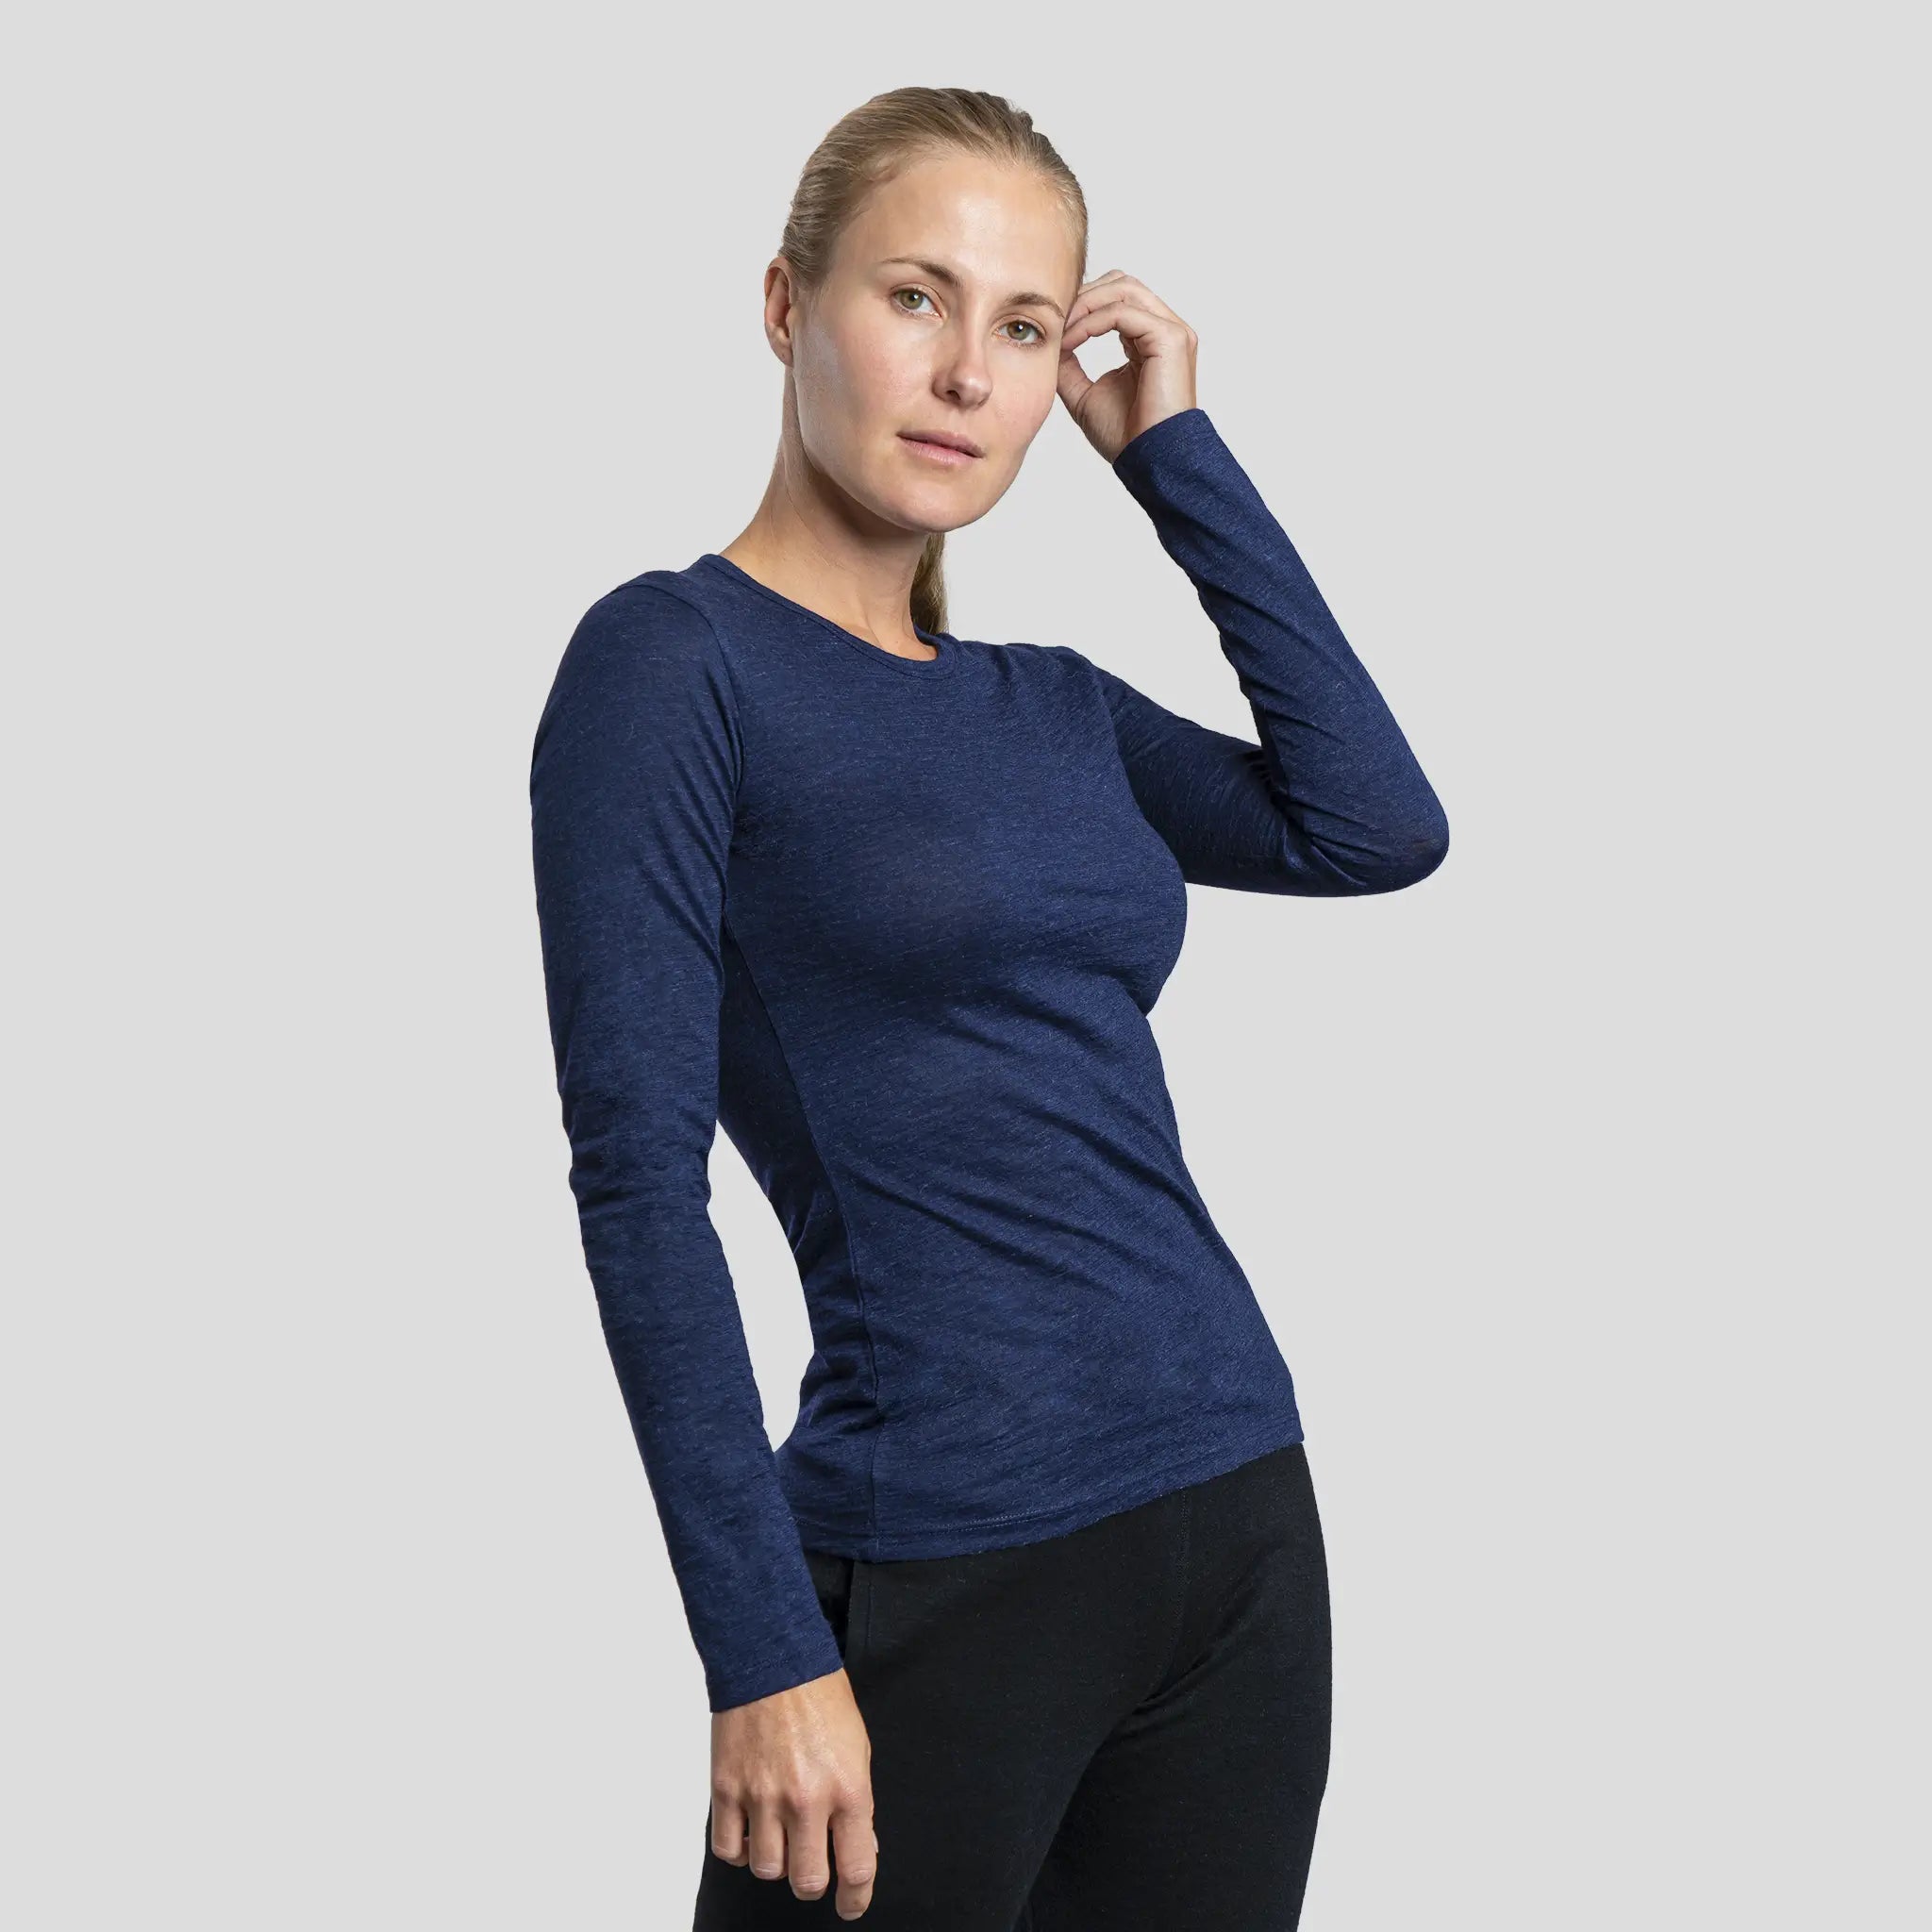 womens high performance long sleeve shirt color navy blue